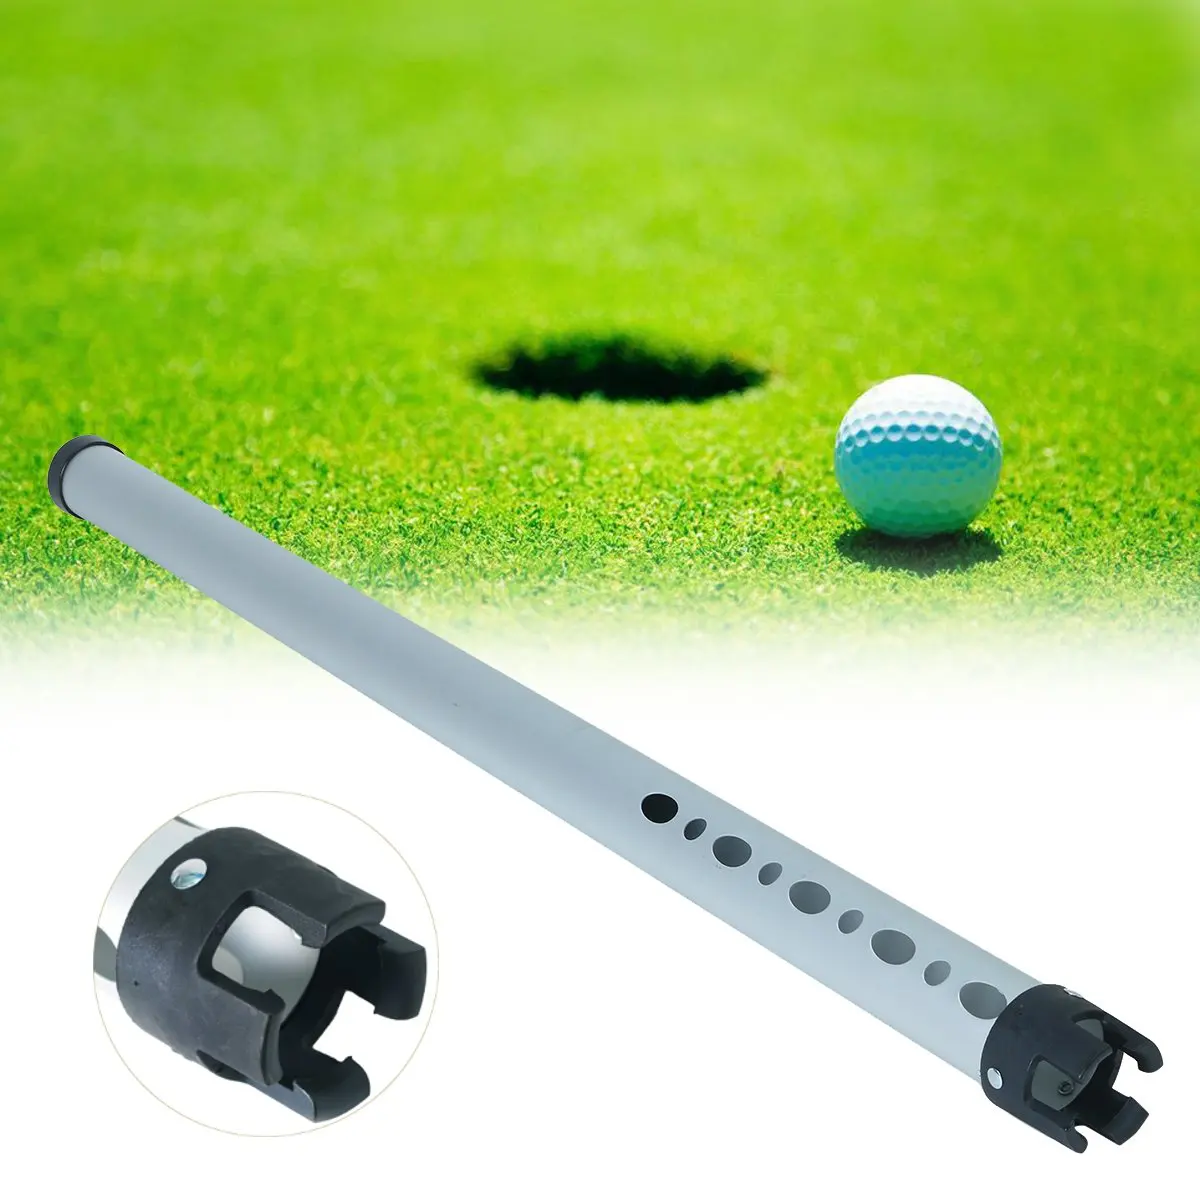 Portable Aluminum Shag Tube Practice Golf Ball Shagger Picker Hold Up 23 Balls Picking Pick Up the Balls Golf Accessory 98 cm